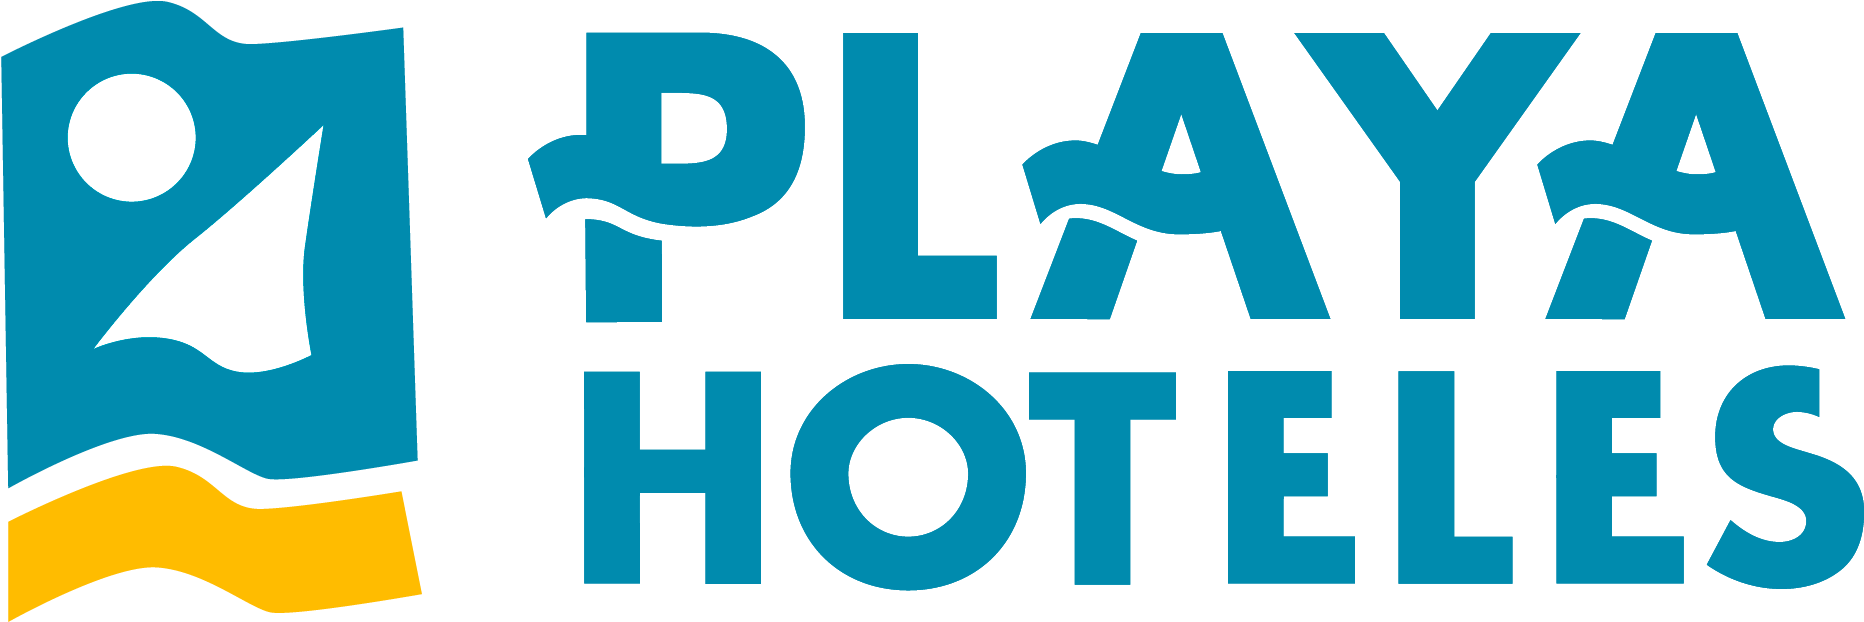 Logo Hoteles Playa Color - Playa Senator (2583x1821), Png Download